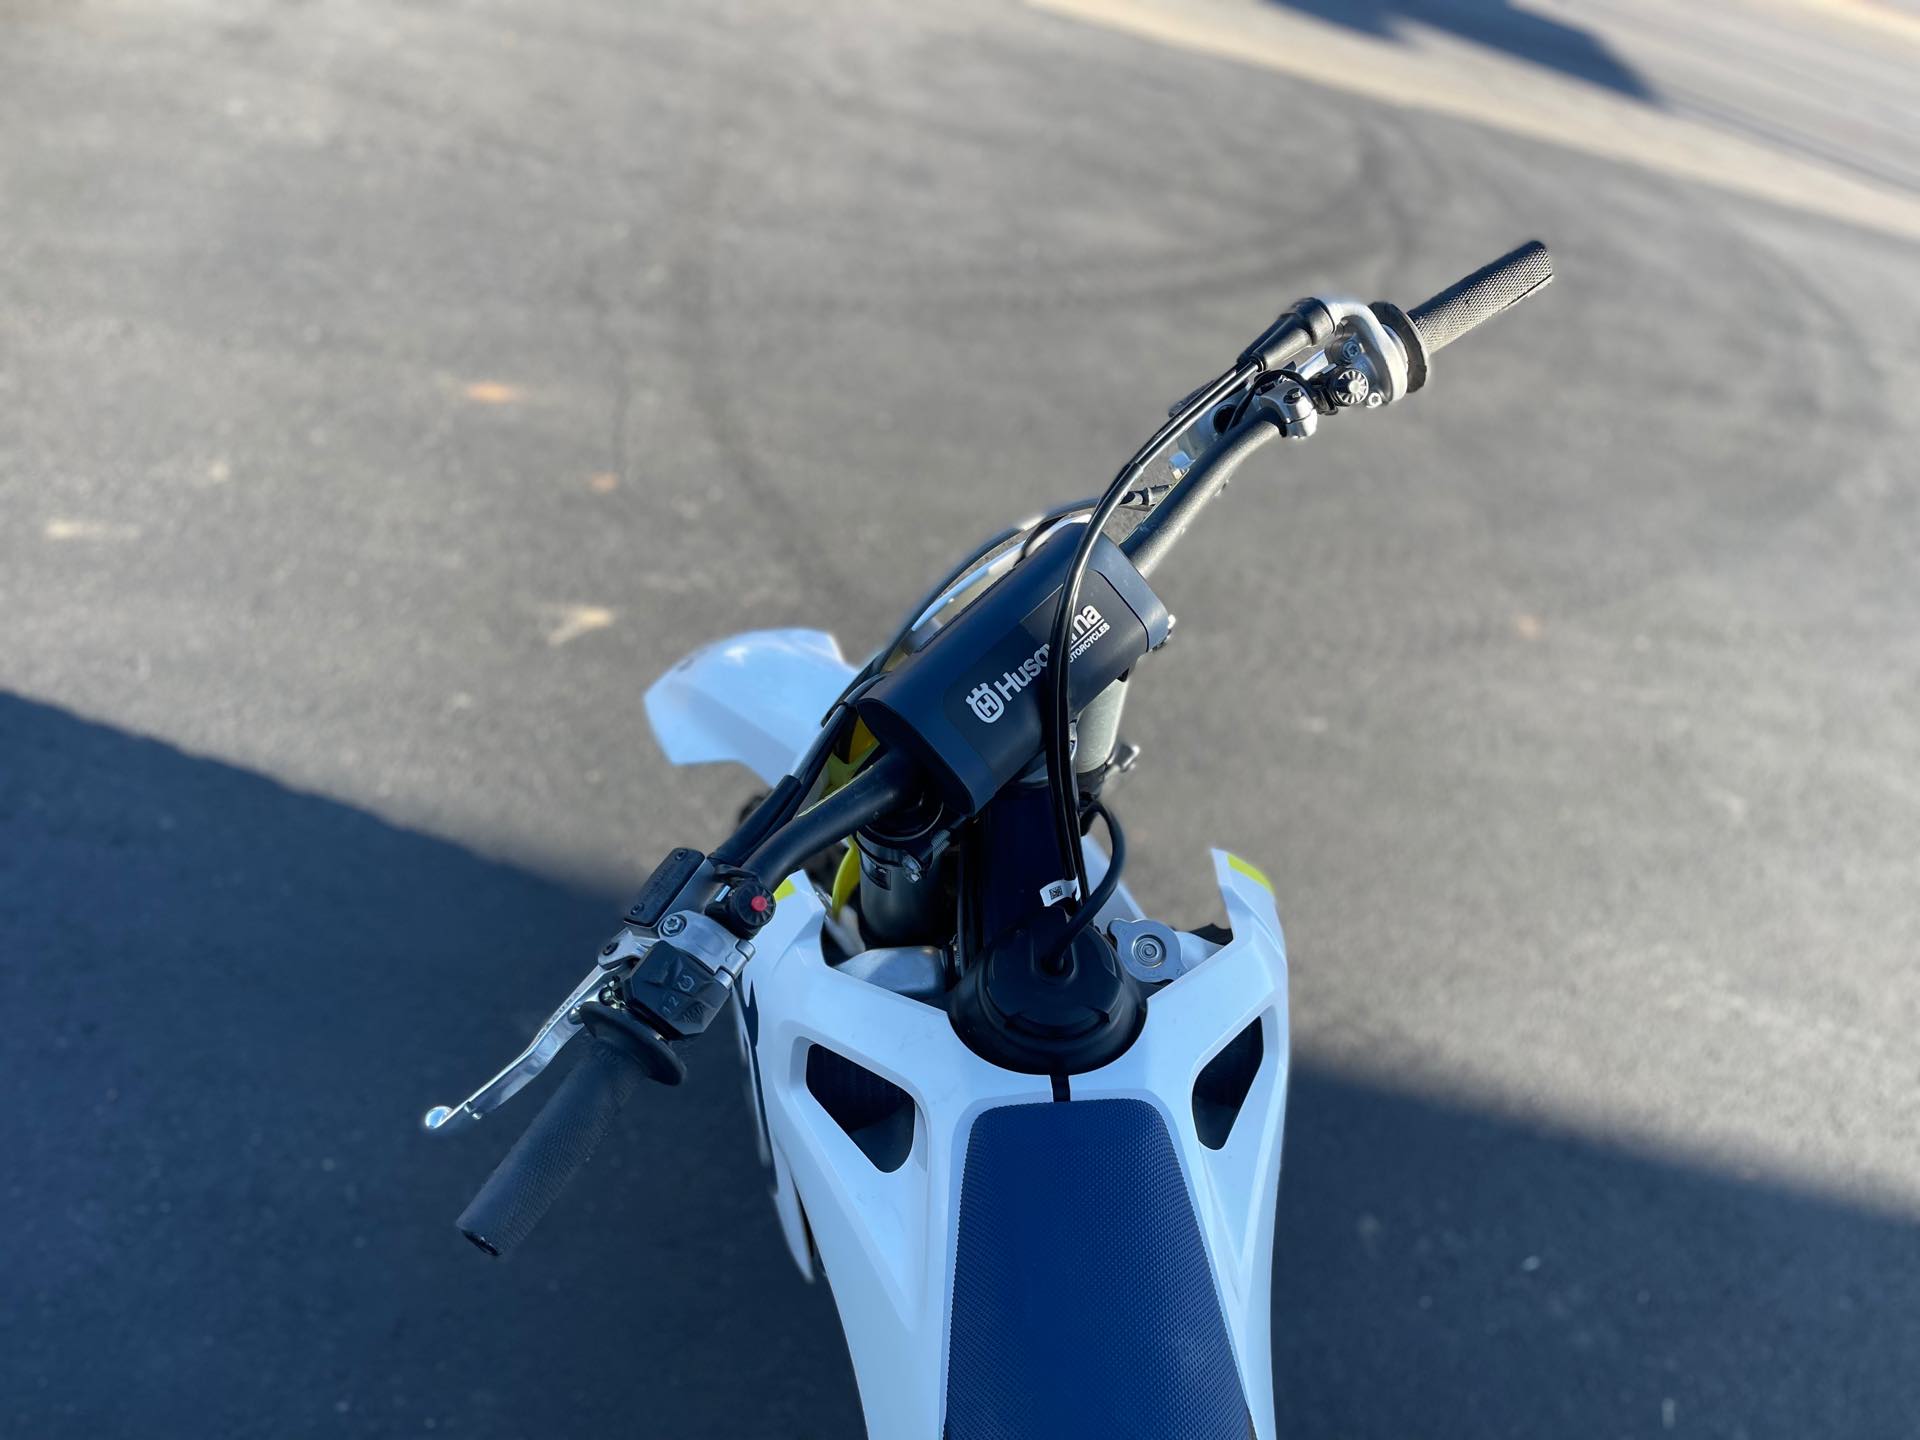 2019 Husqvarna FC 450 at Bobby J's Yamaha, Albuquerque, NM 87110